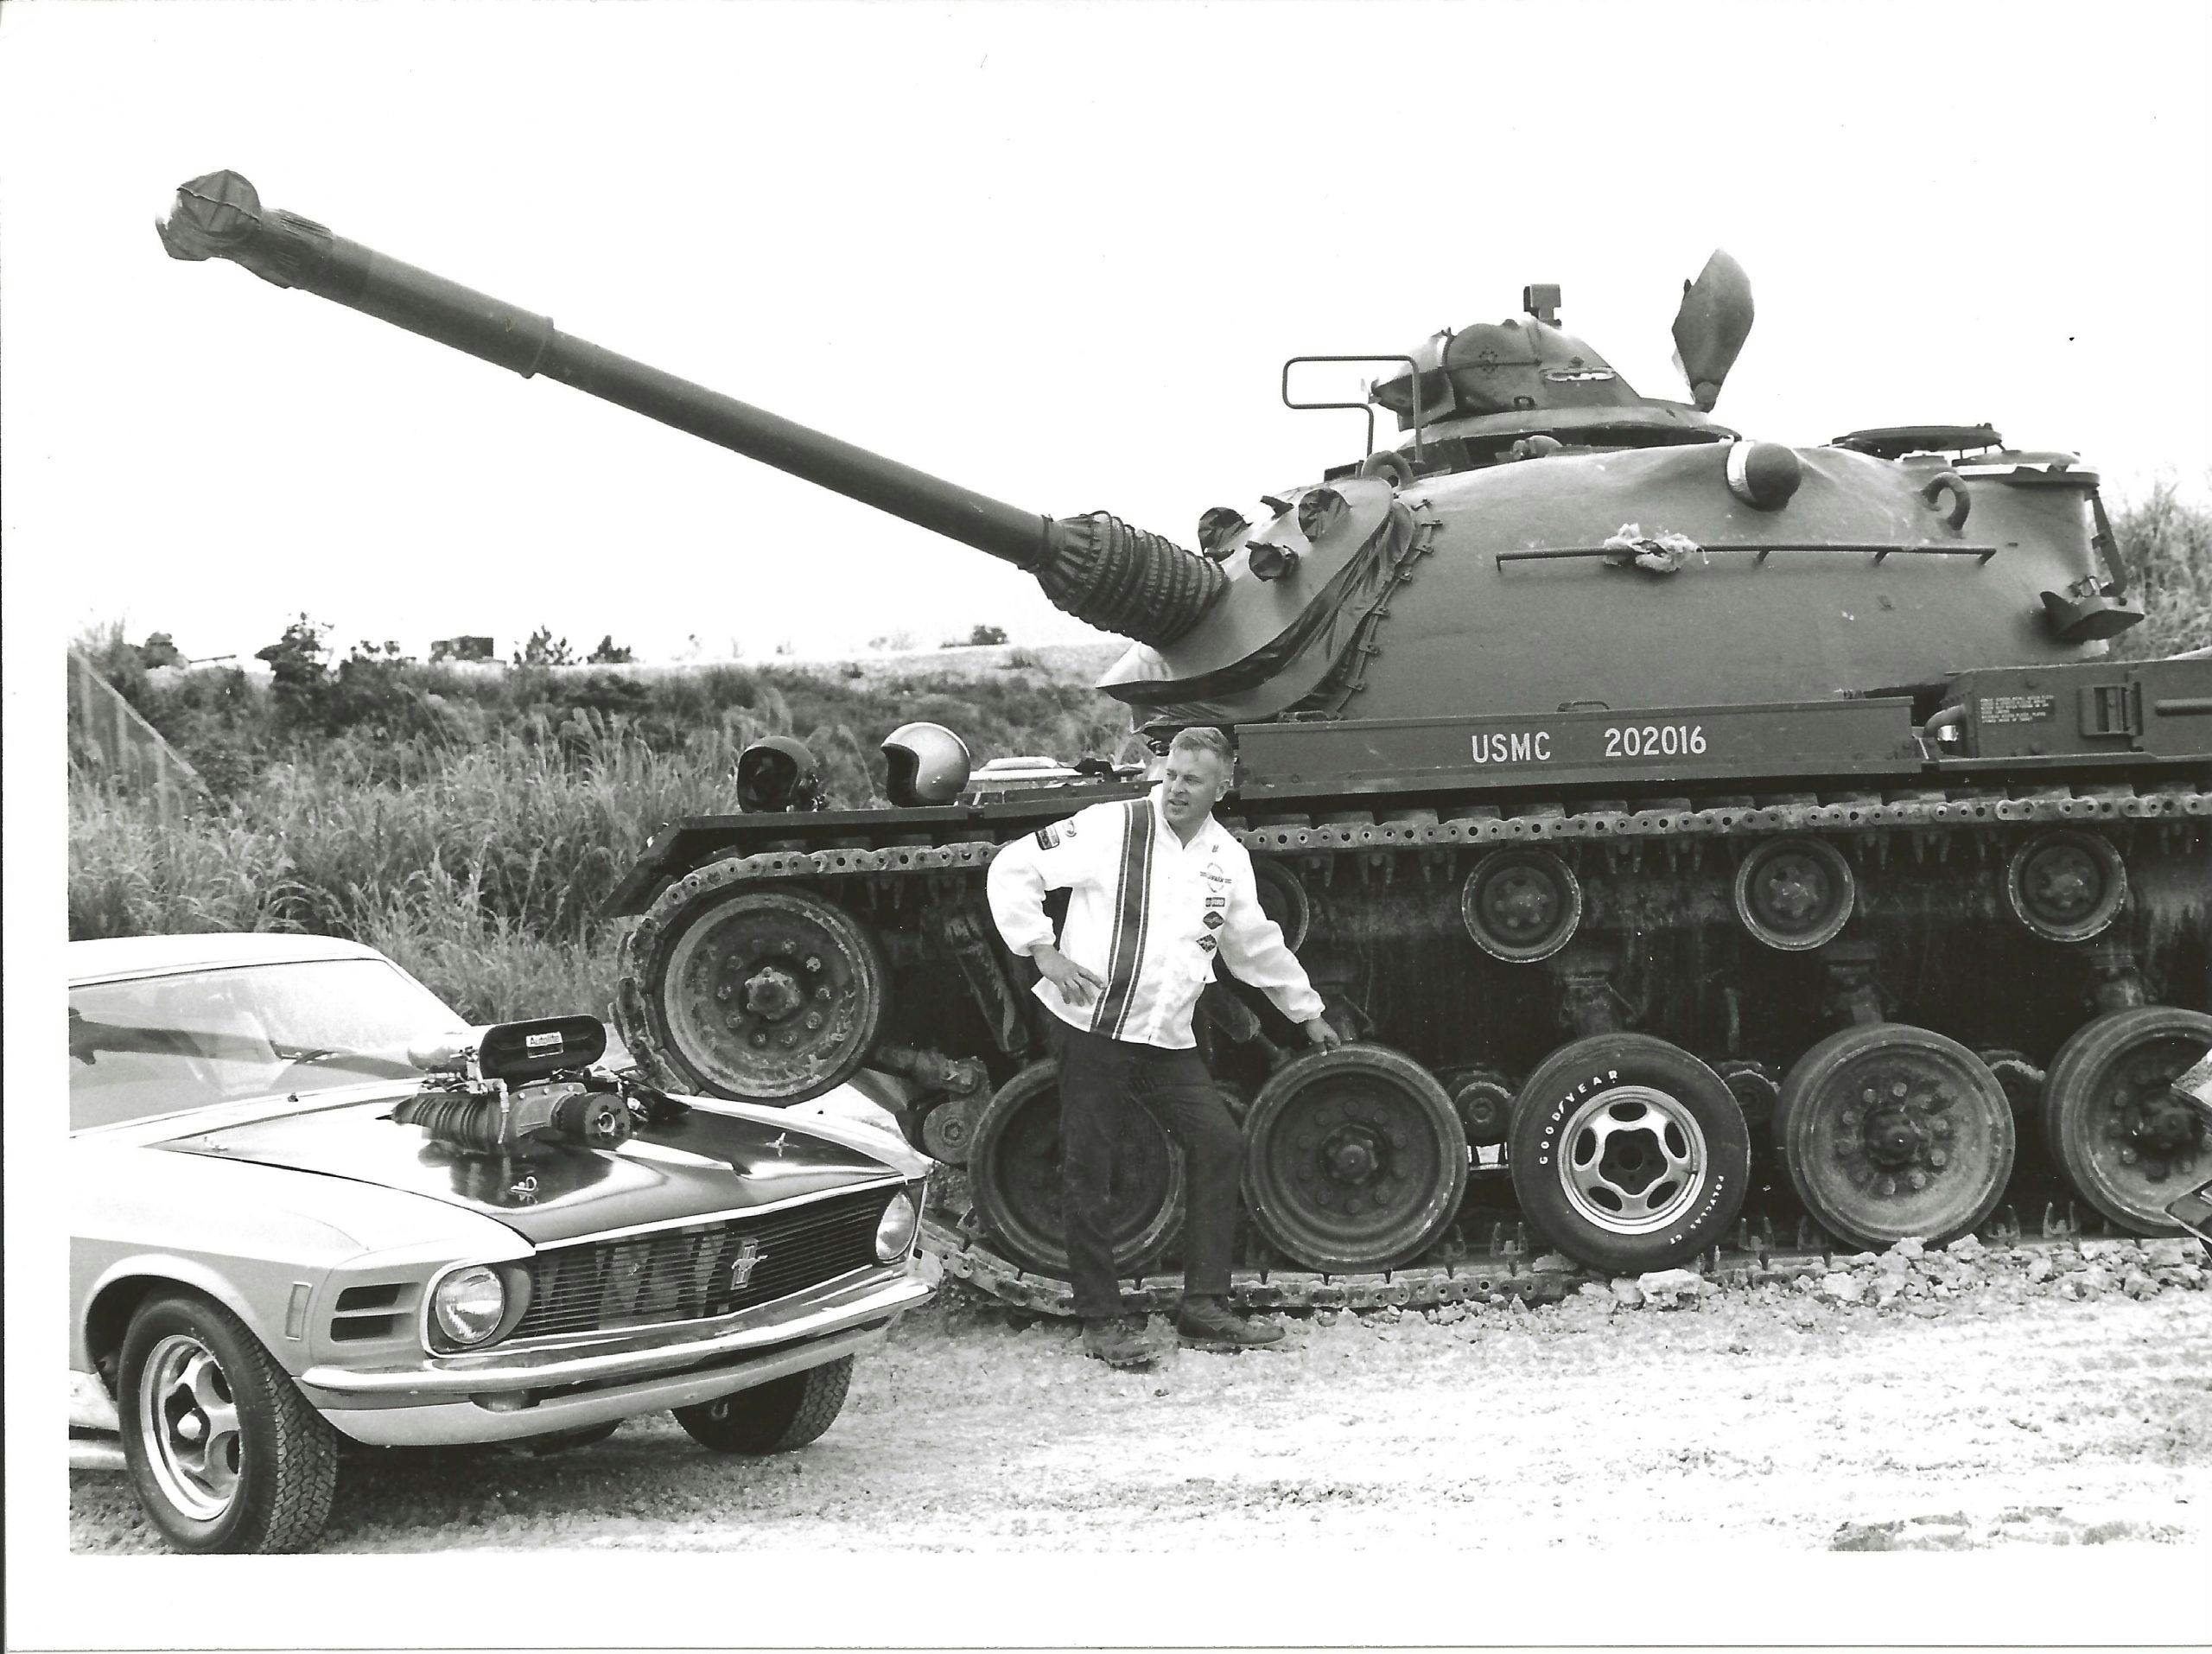 Lawman Boss 429 Ford Mustang historical car beside USMC battle tank black and white